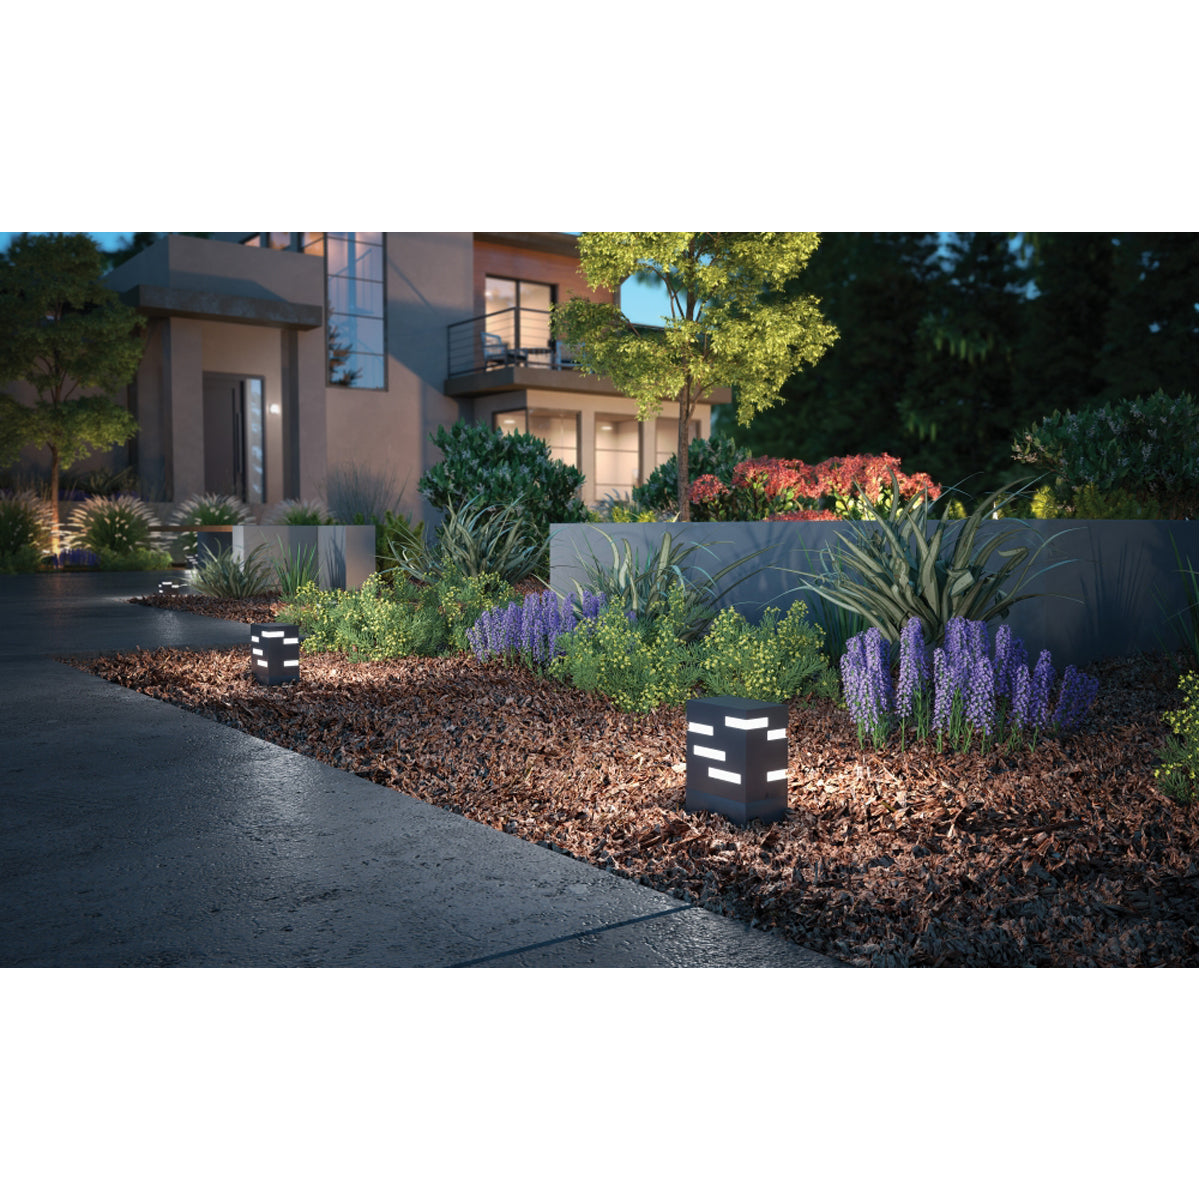 Tech Lighting Revel 8-inch Outdoor Path Lighting - Concrete Mount